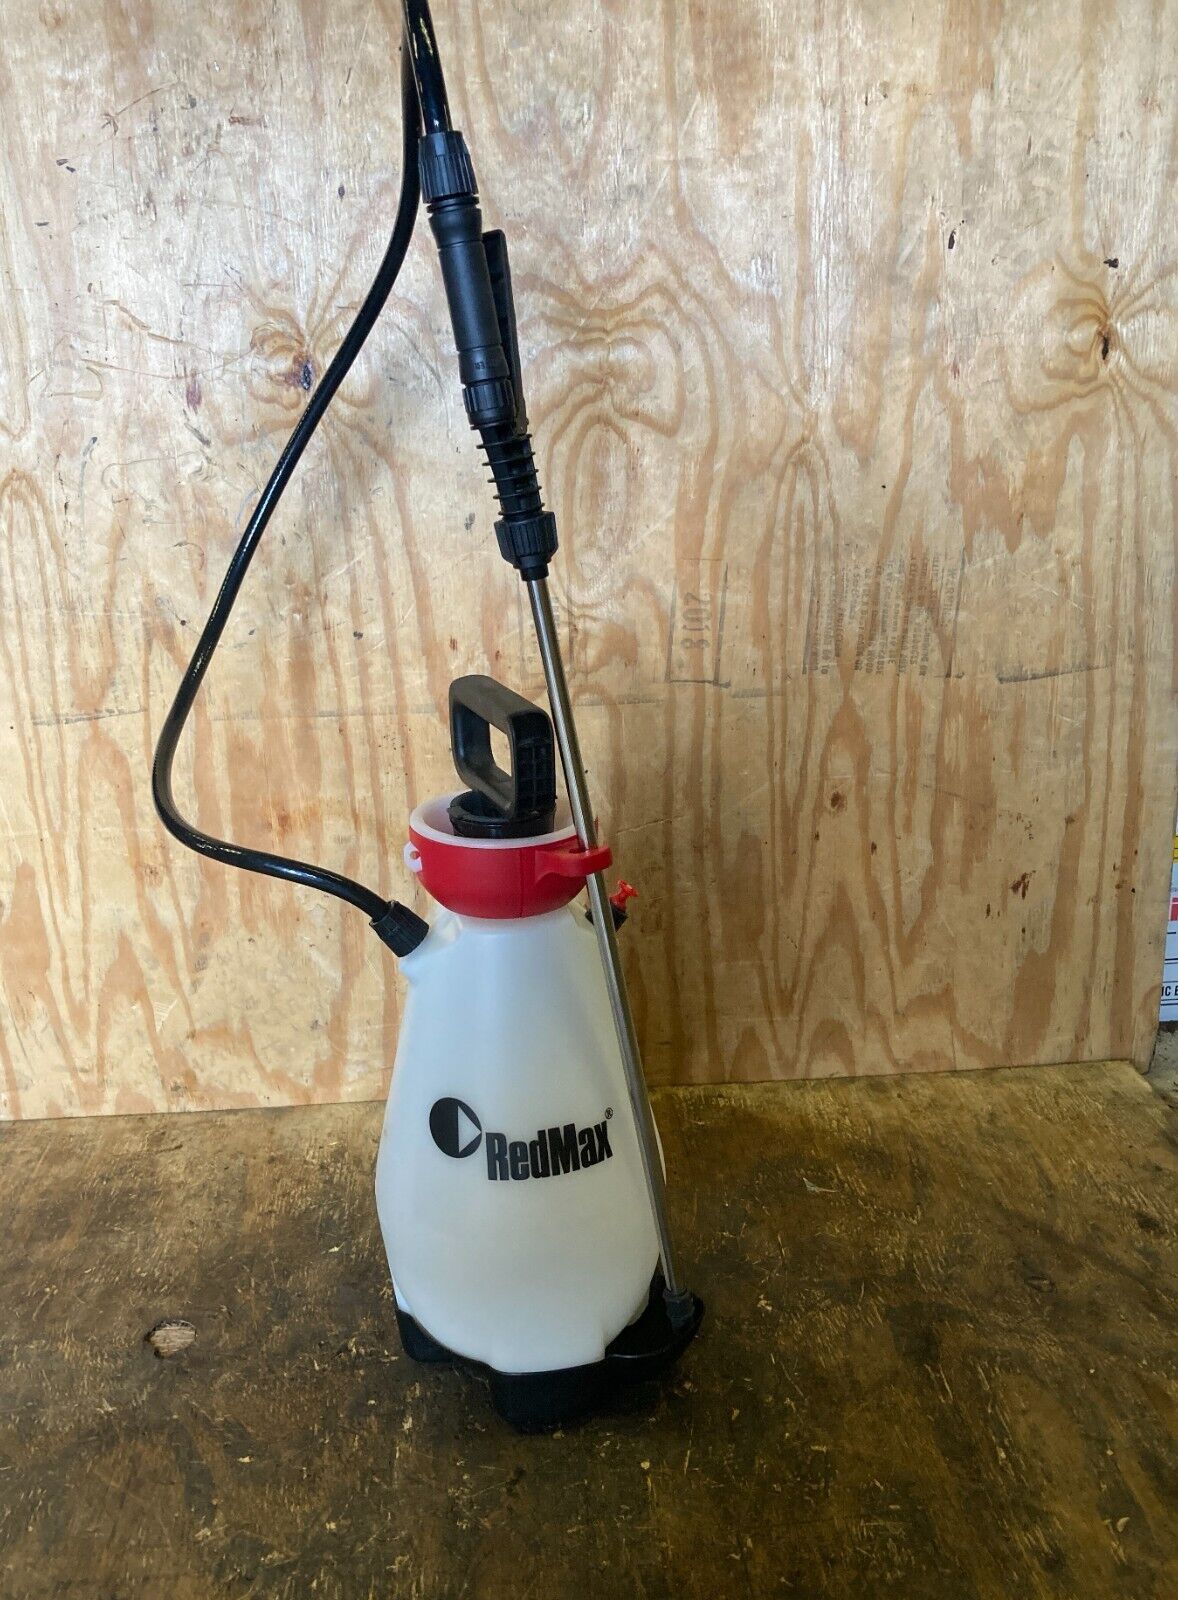 RedMax 596766201 2 Gallon Handheld Sprayer - $54.00